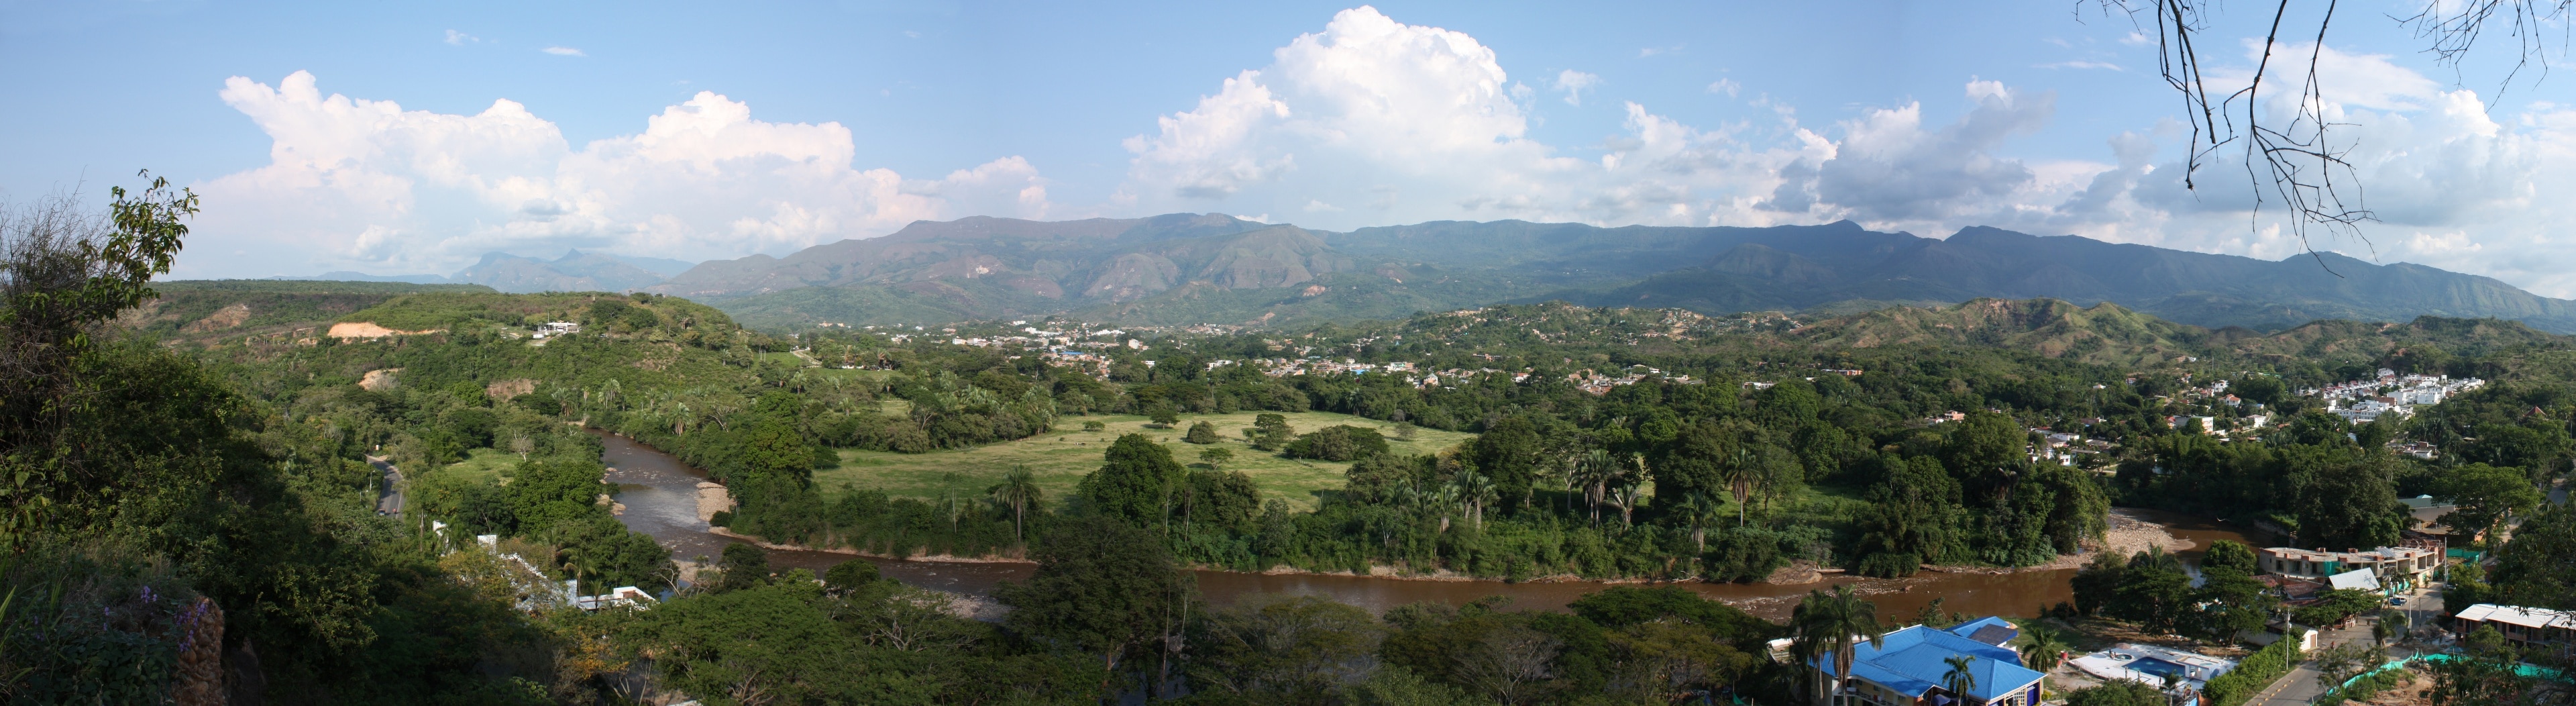 Santa Marta, Magdalena, Colombia